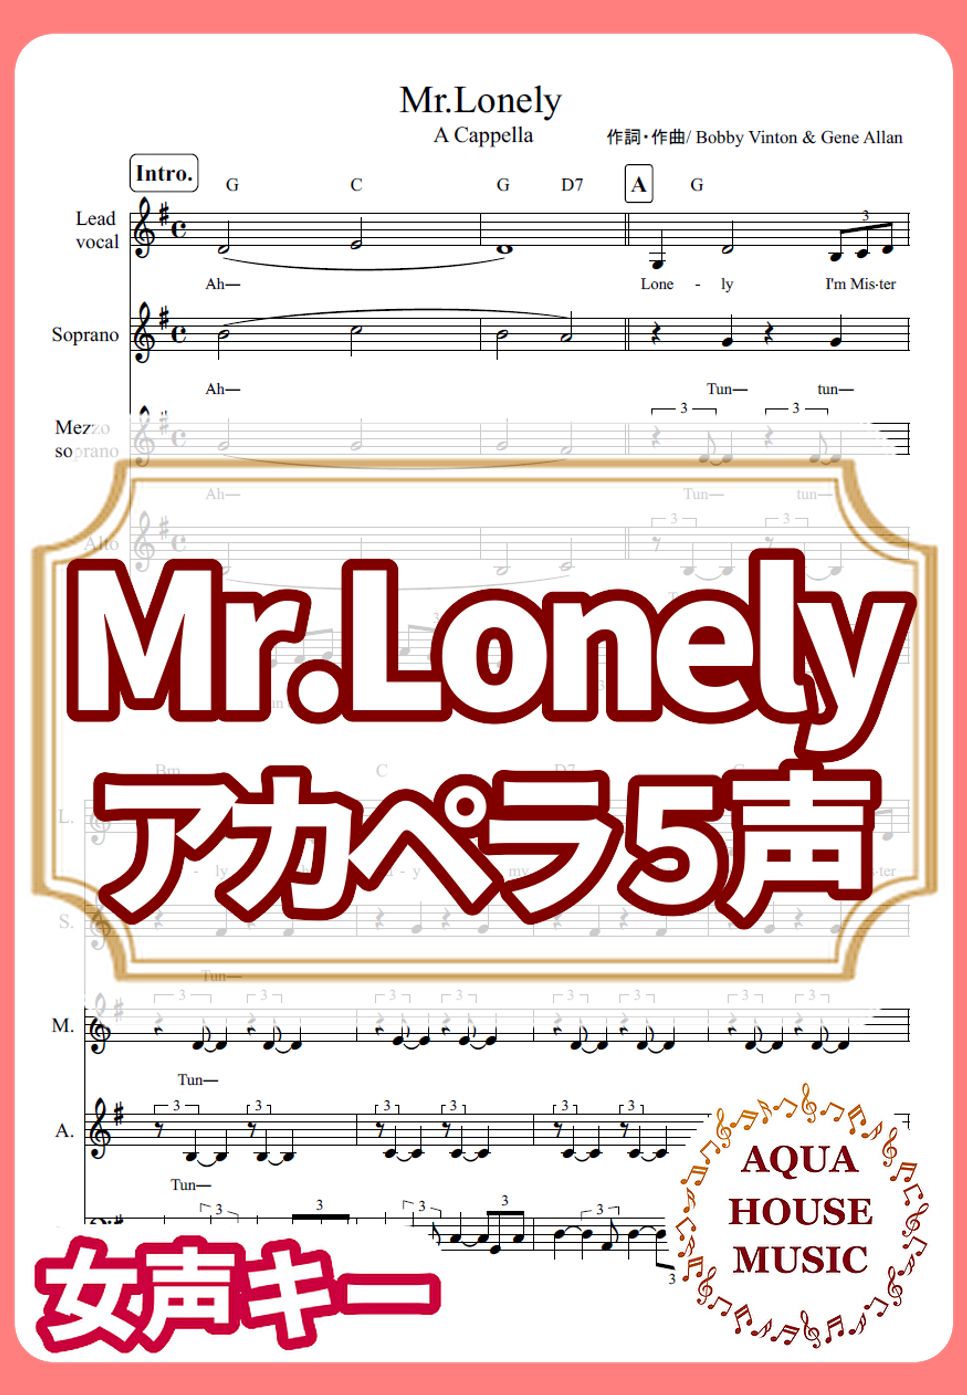 Bobby Vinton - Mr.Lonely (アカペラ楽譜♪５声ボイパなし) by 飯田 亜紗子